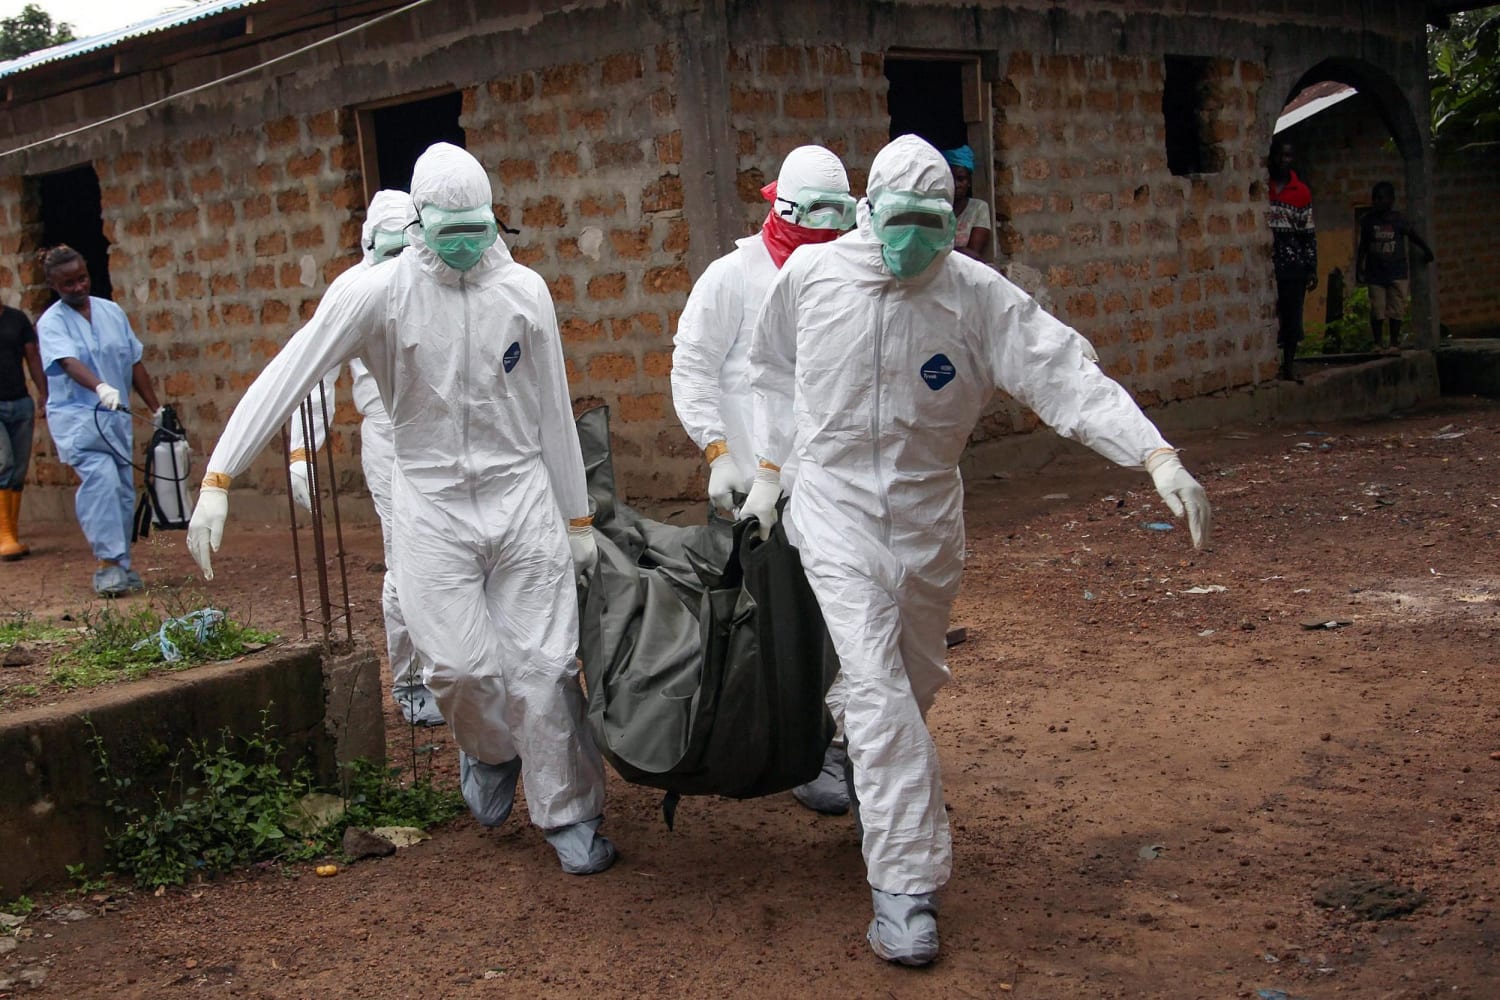 Ebola team